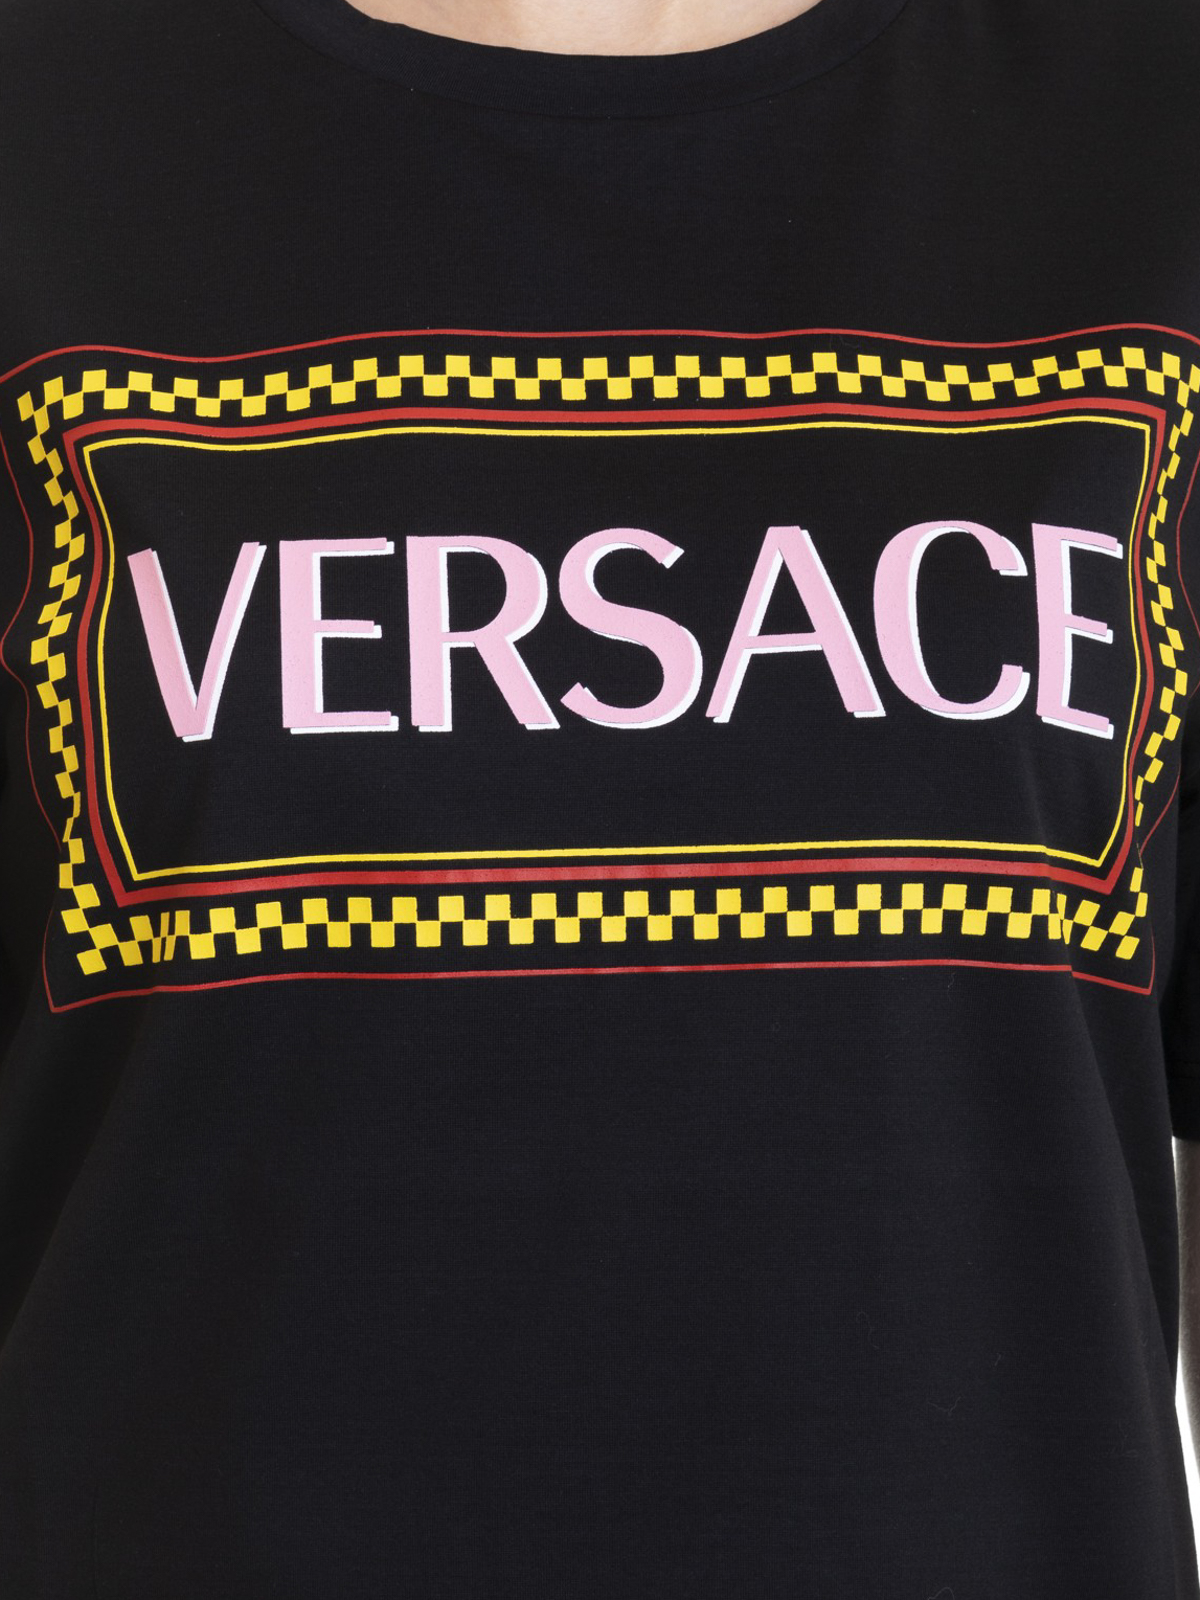 versace shirt 90s